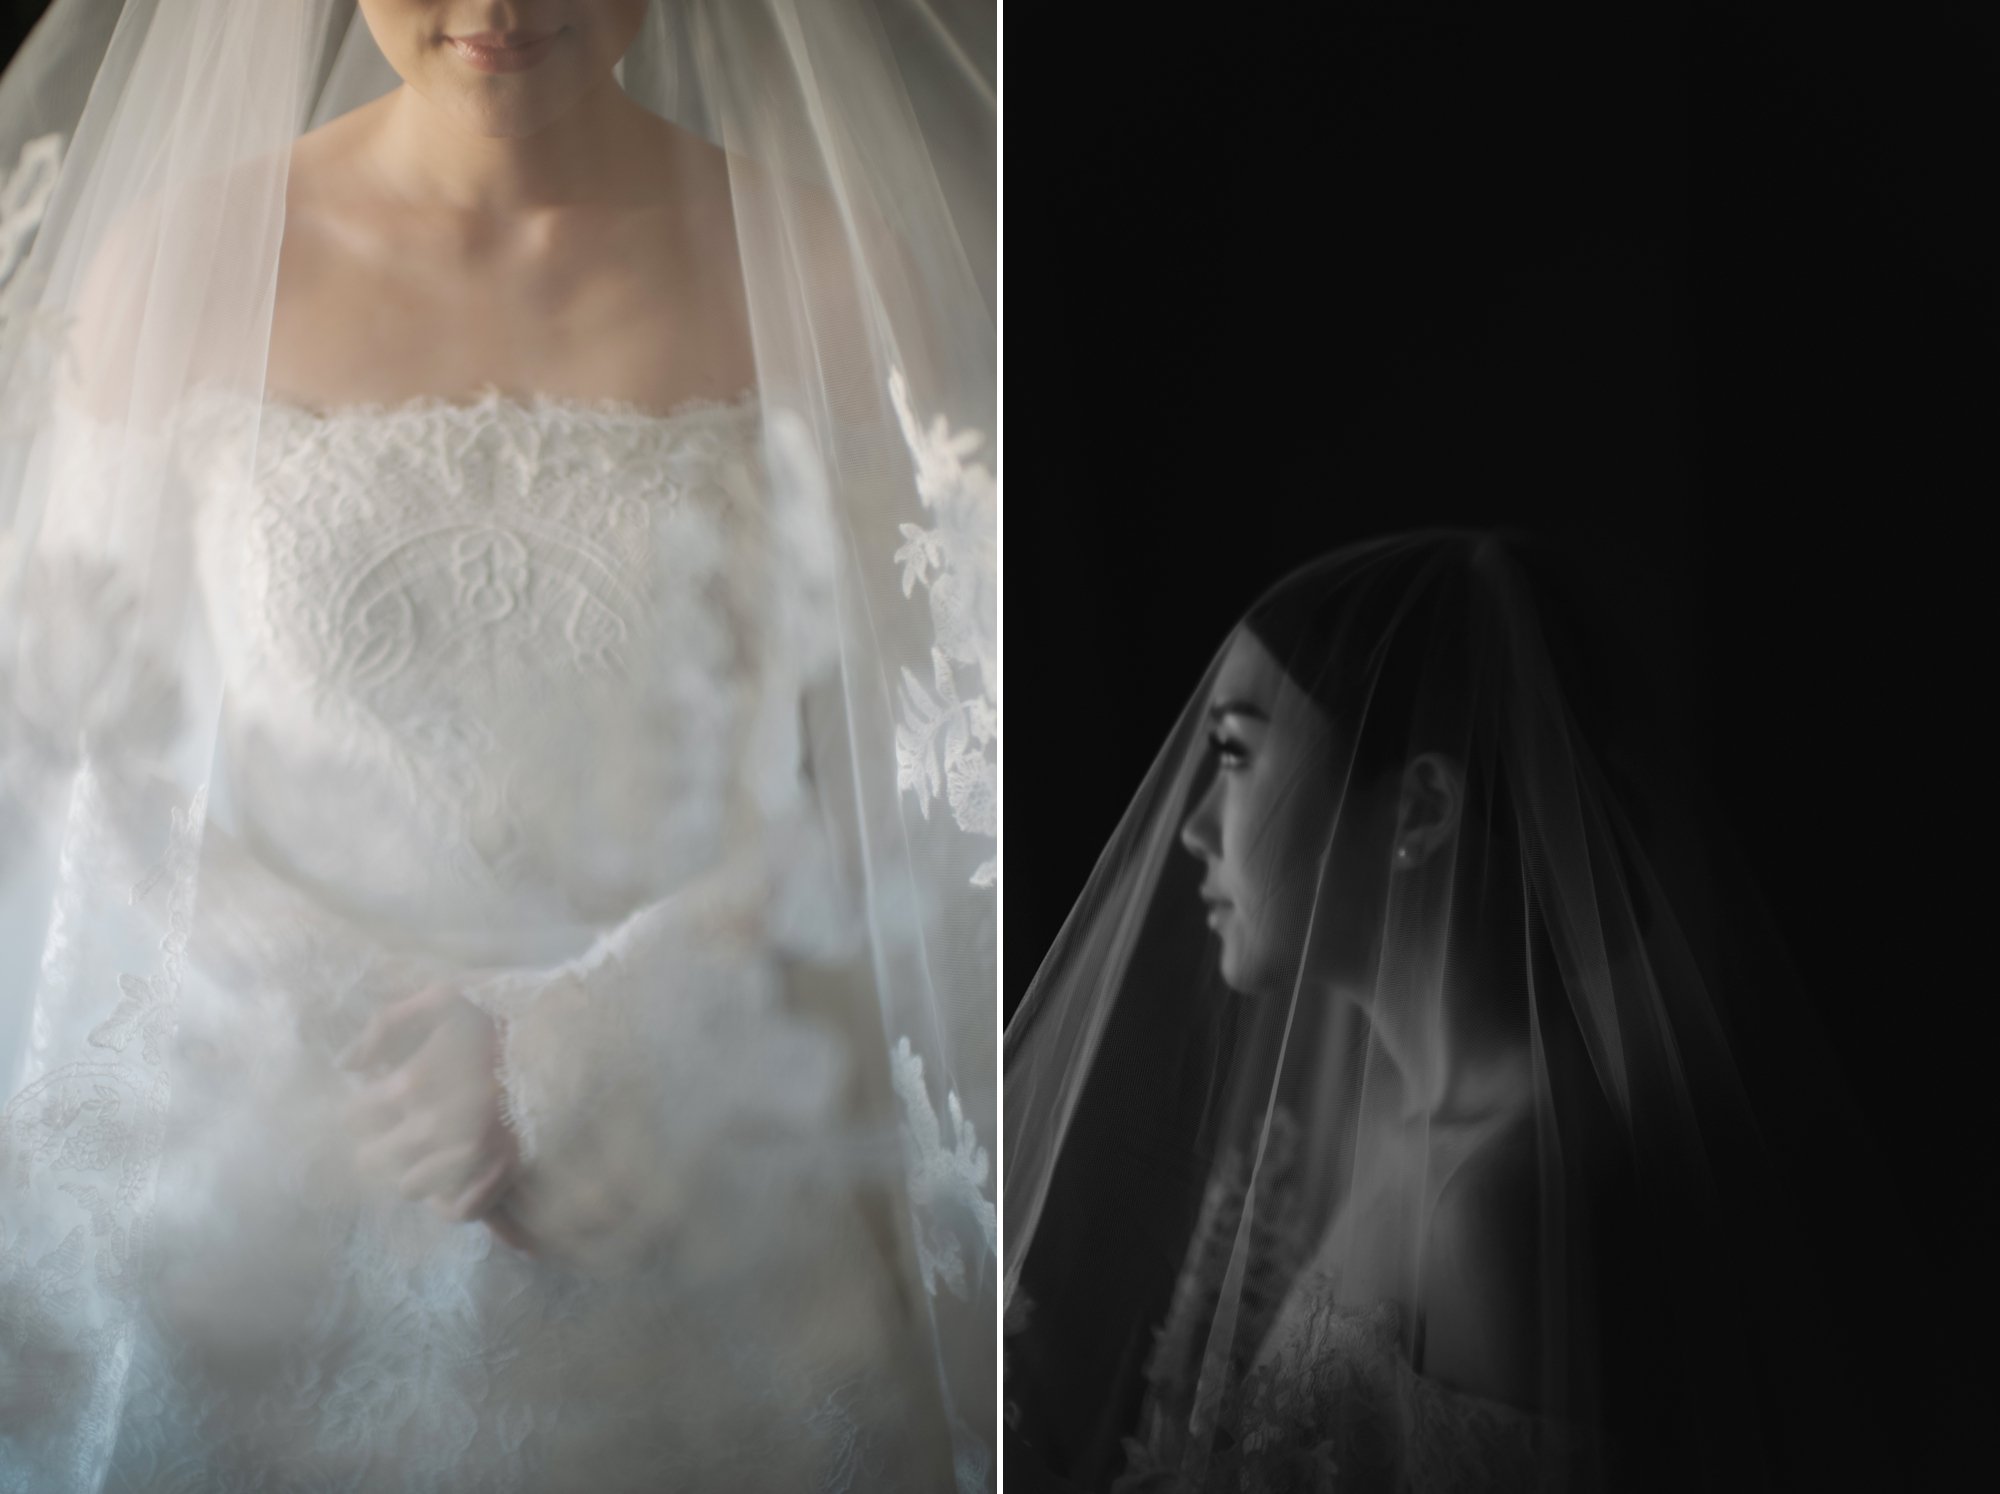 Prawira-Evelyn-Dolomites-Italy-Santre wedding-Yefta Gunawan-Jeriko MUA-Carol Kuntjoro Photography-41.jpg